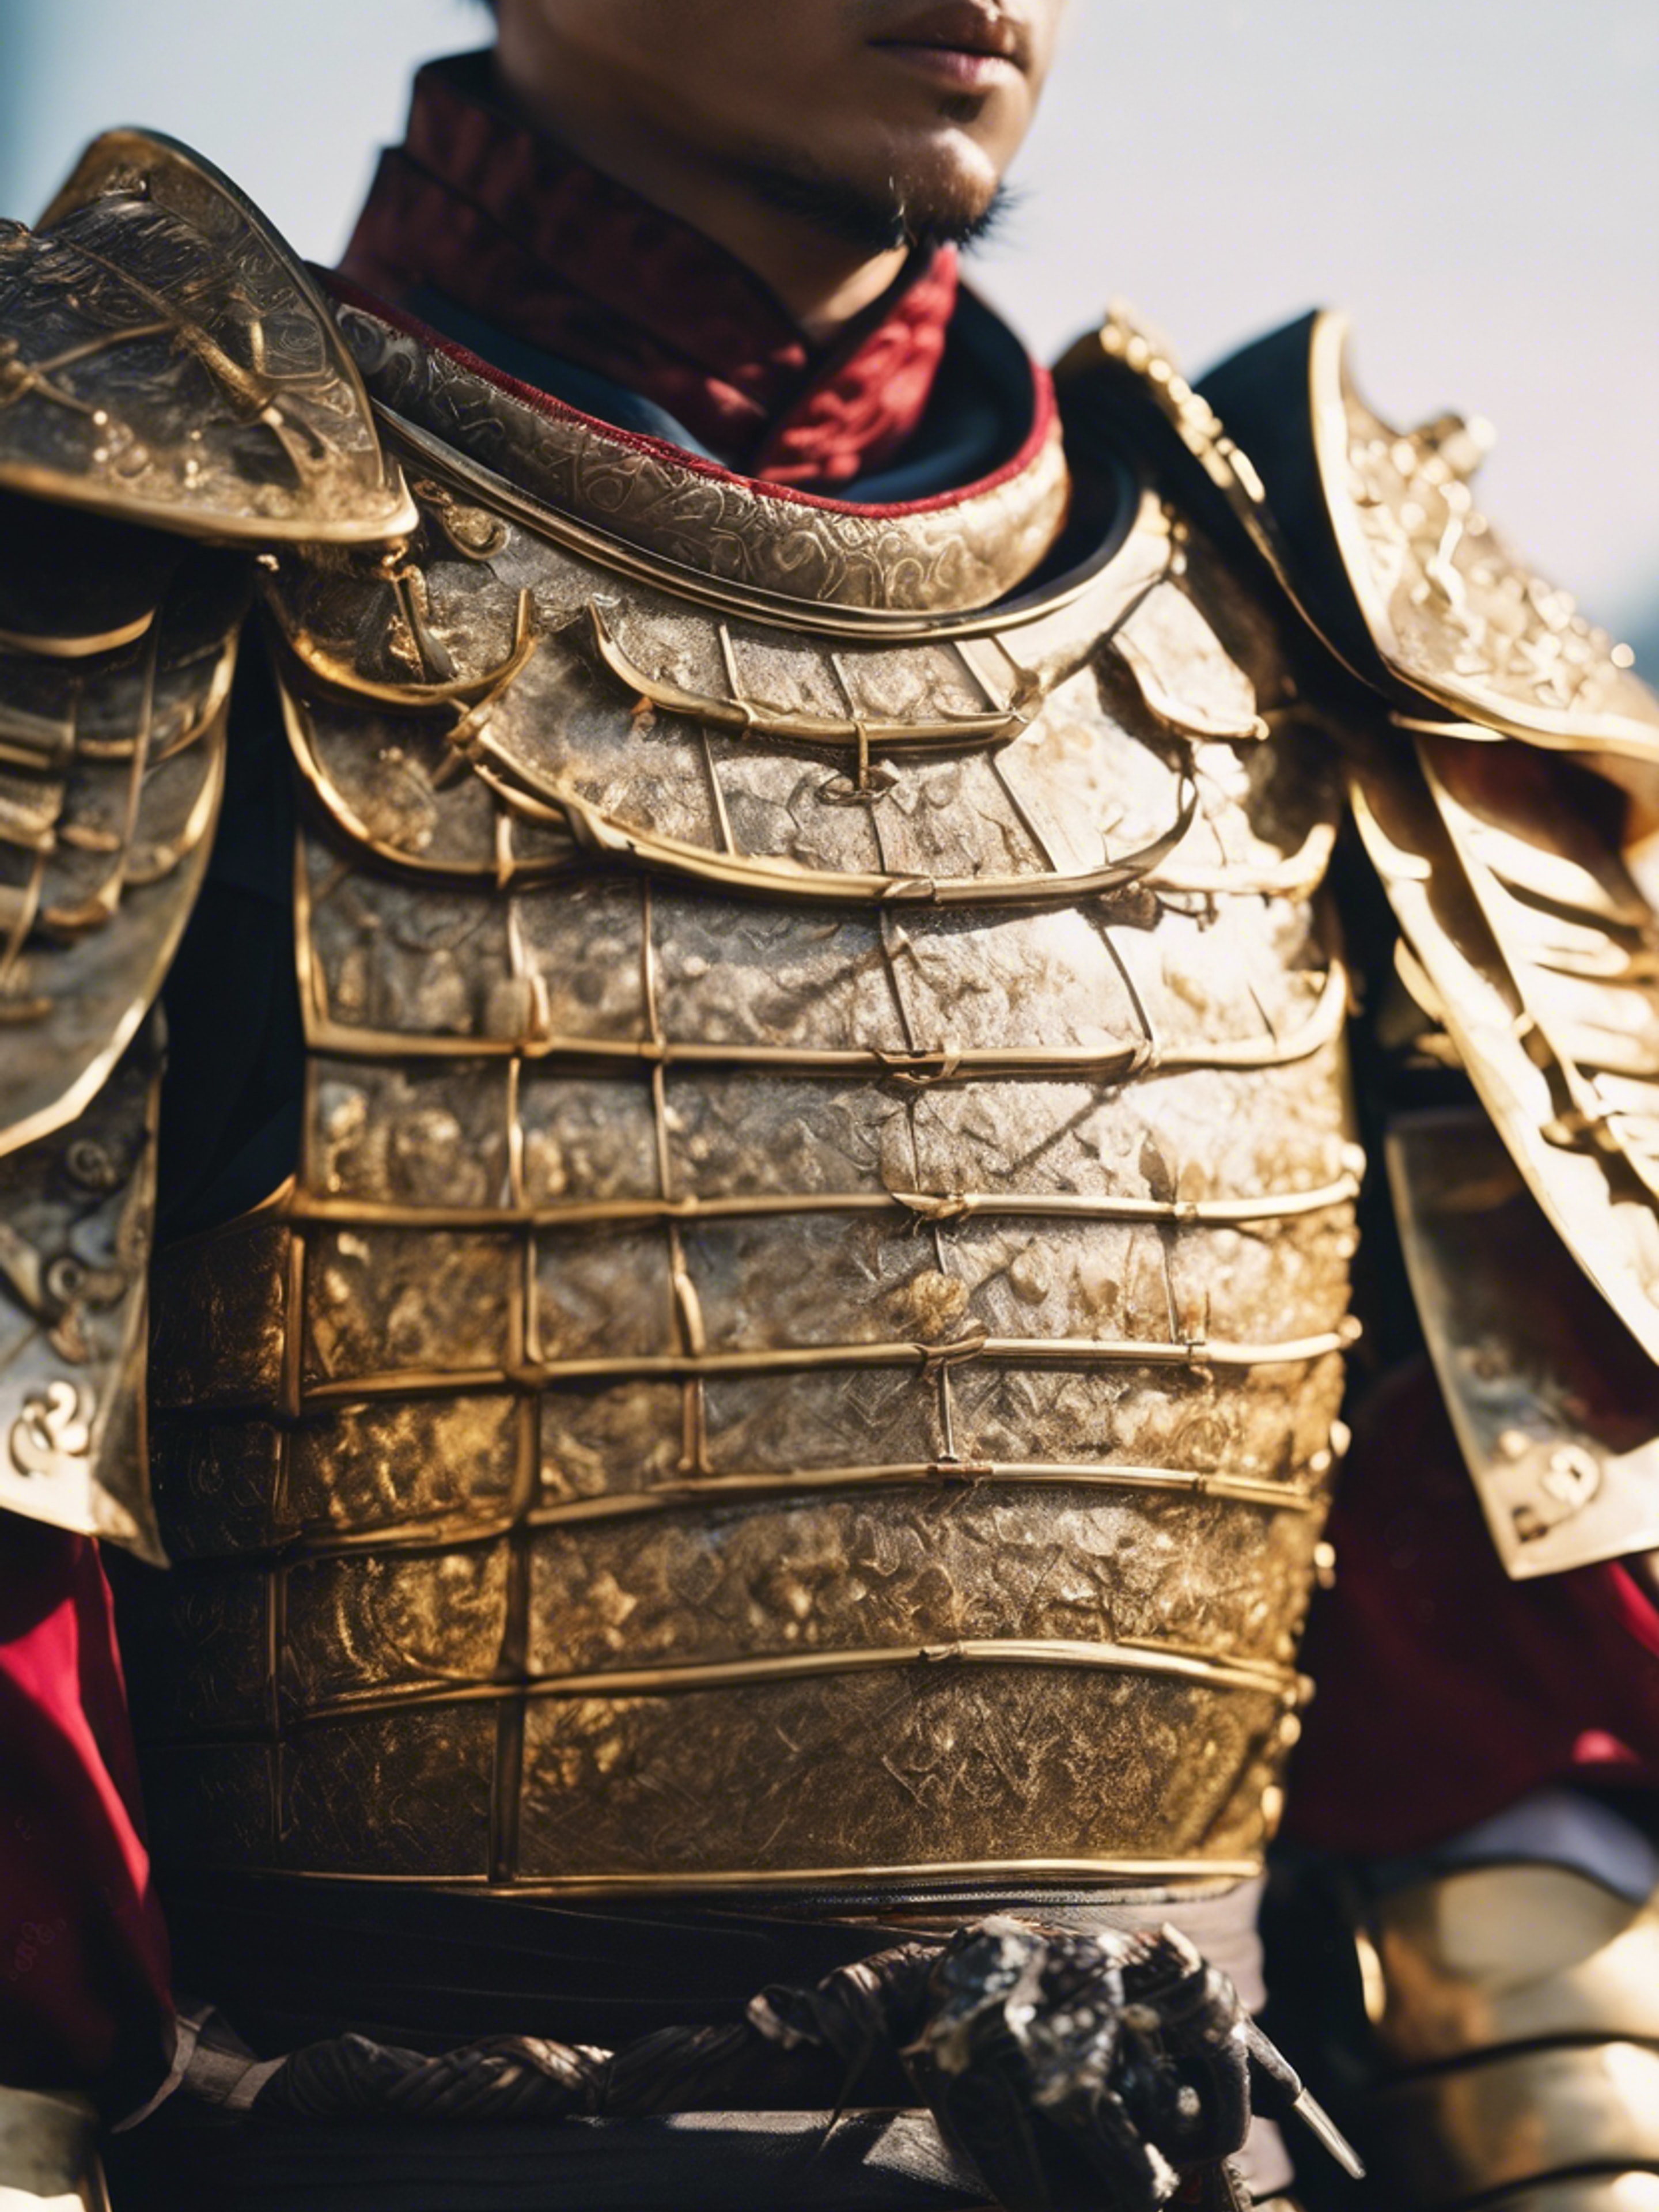 A close-up detail of a beautiful samurai armor glistening in the sunlight Fondo de pantalla[f86ed1772fa04d06b0b3]